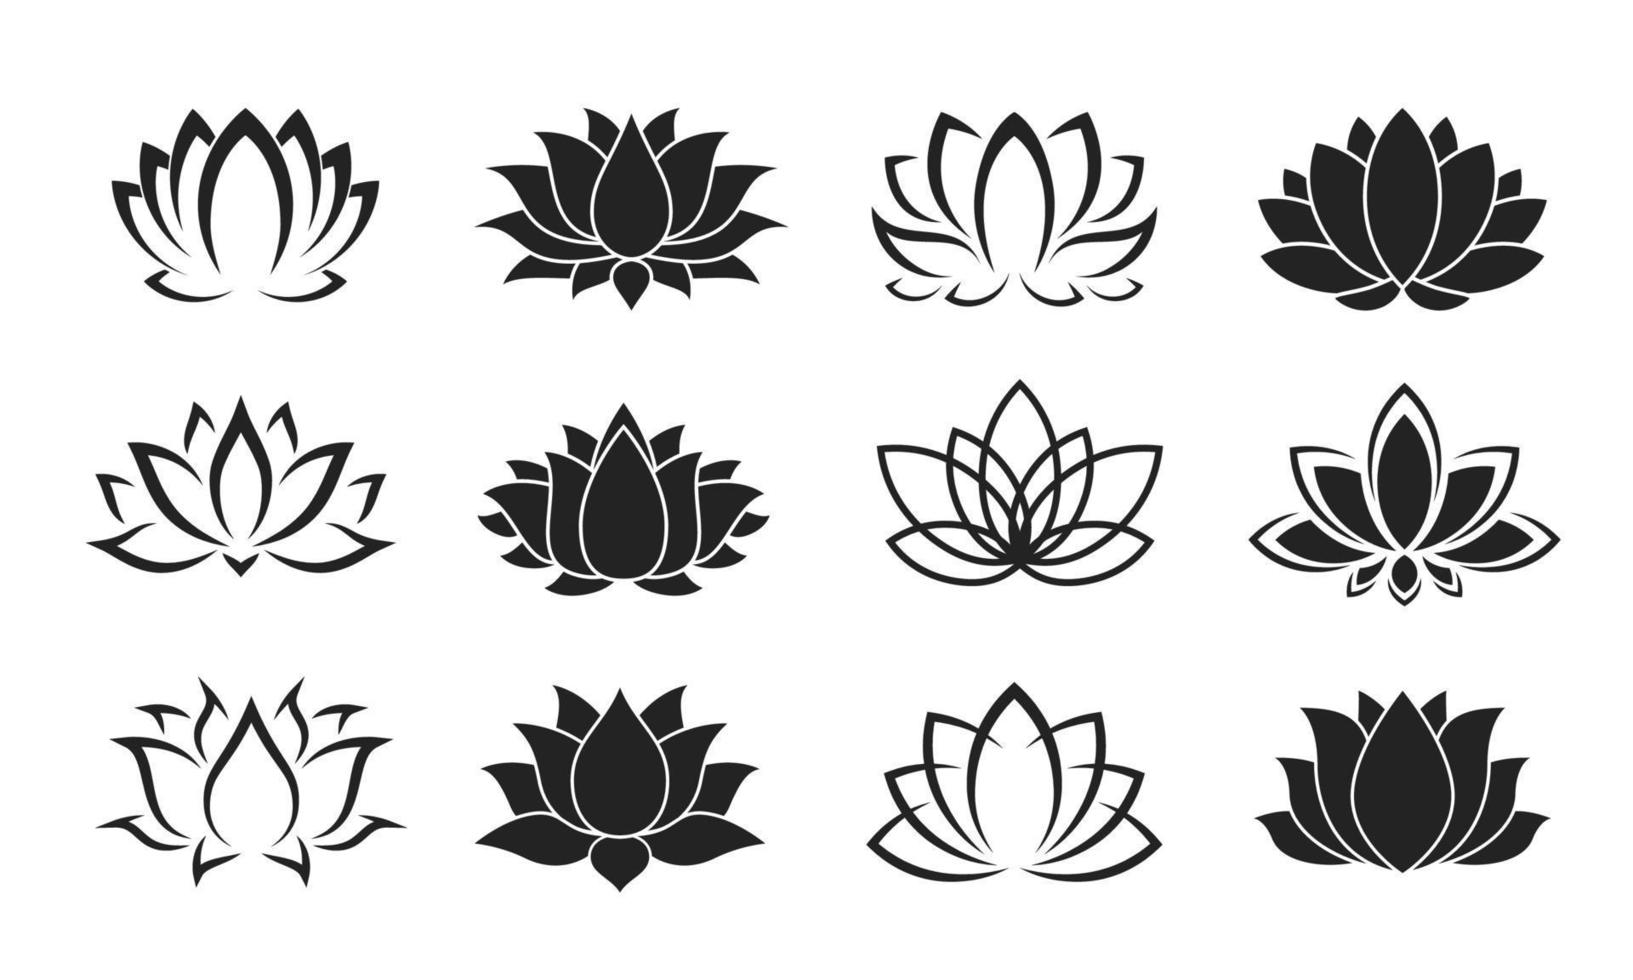 Lotusblumensymbole, Buddhismus und Yogasymbole vektor